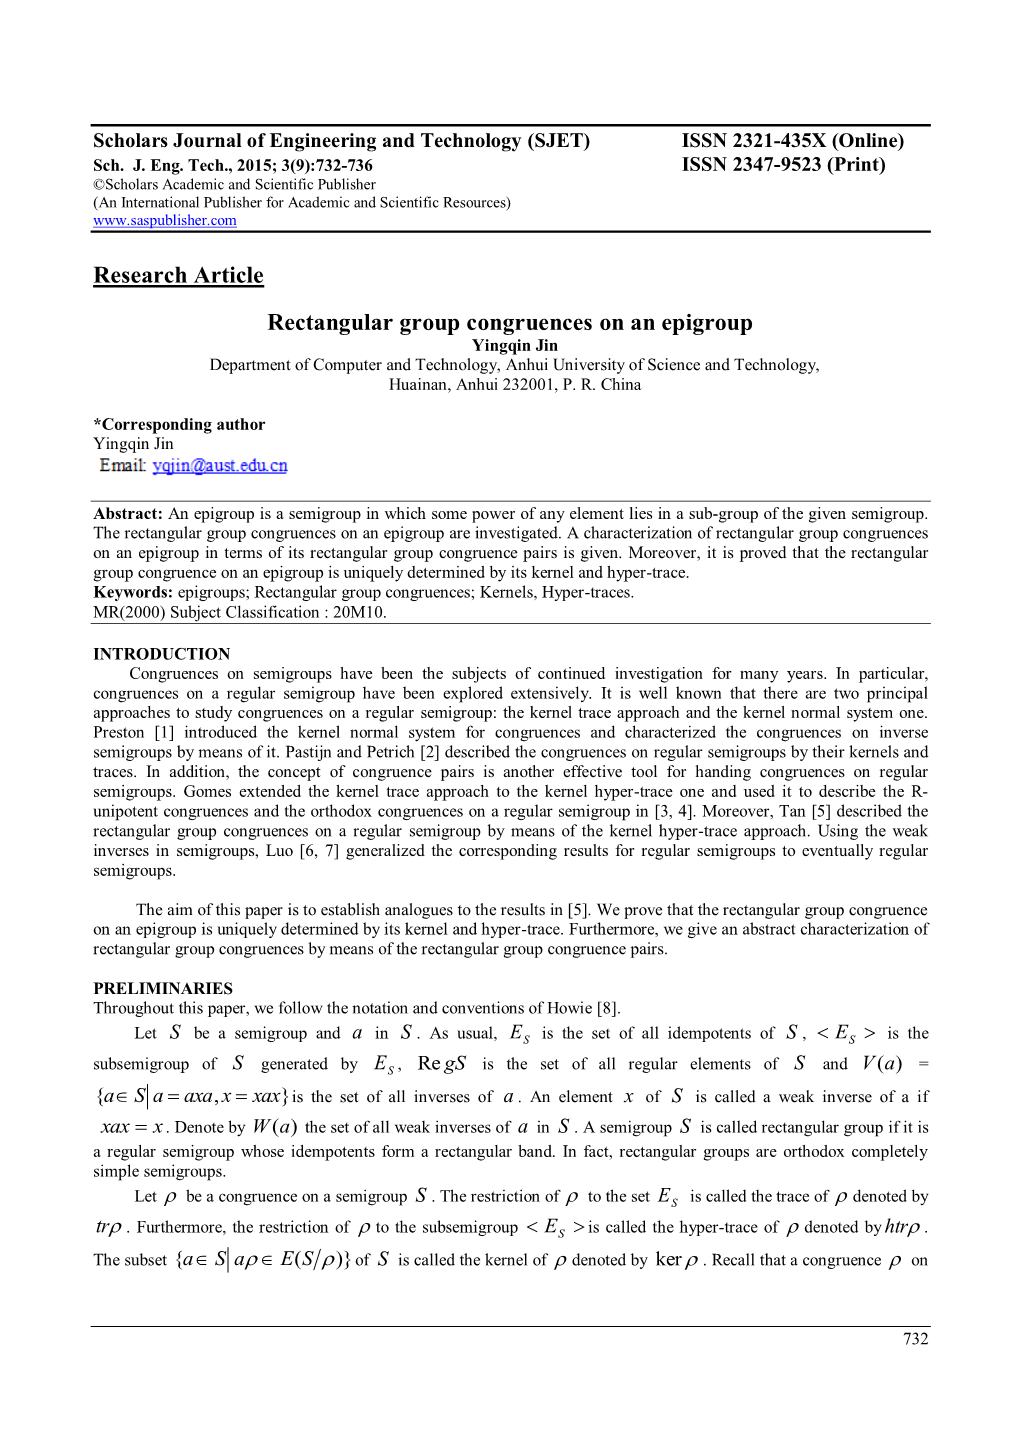 Research Article Rectangular Group Congruences on an Epigroup